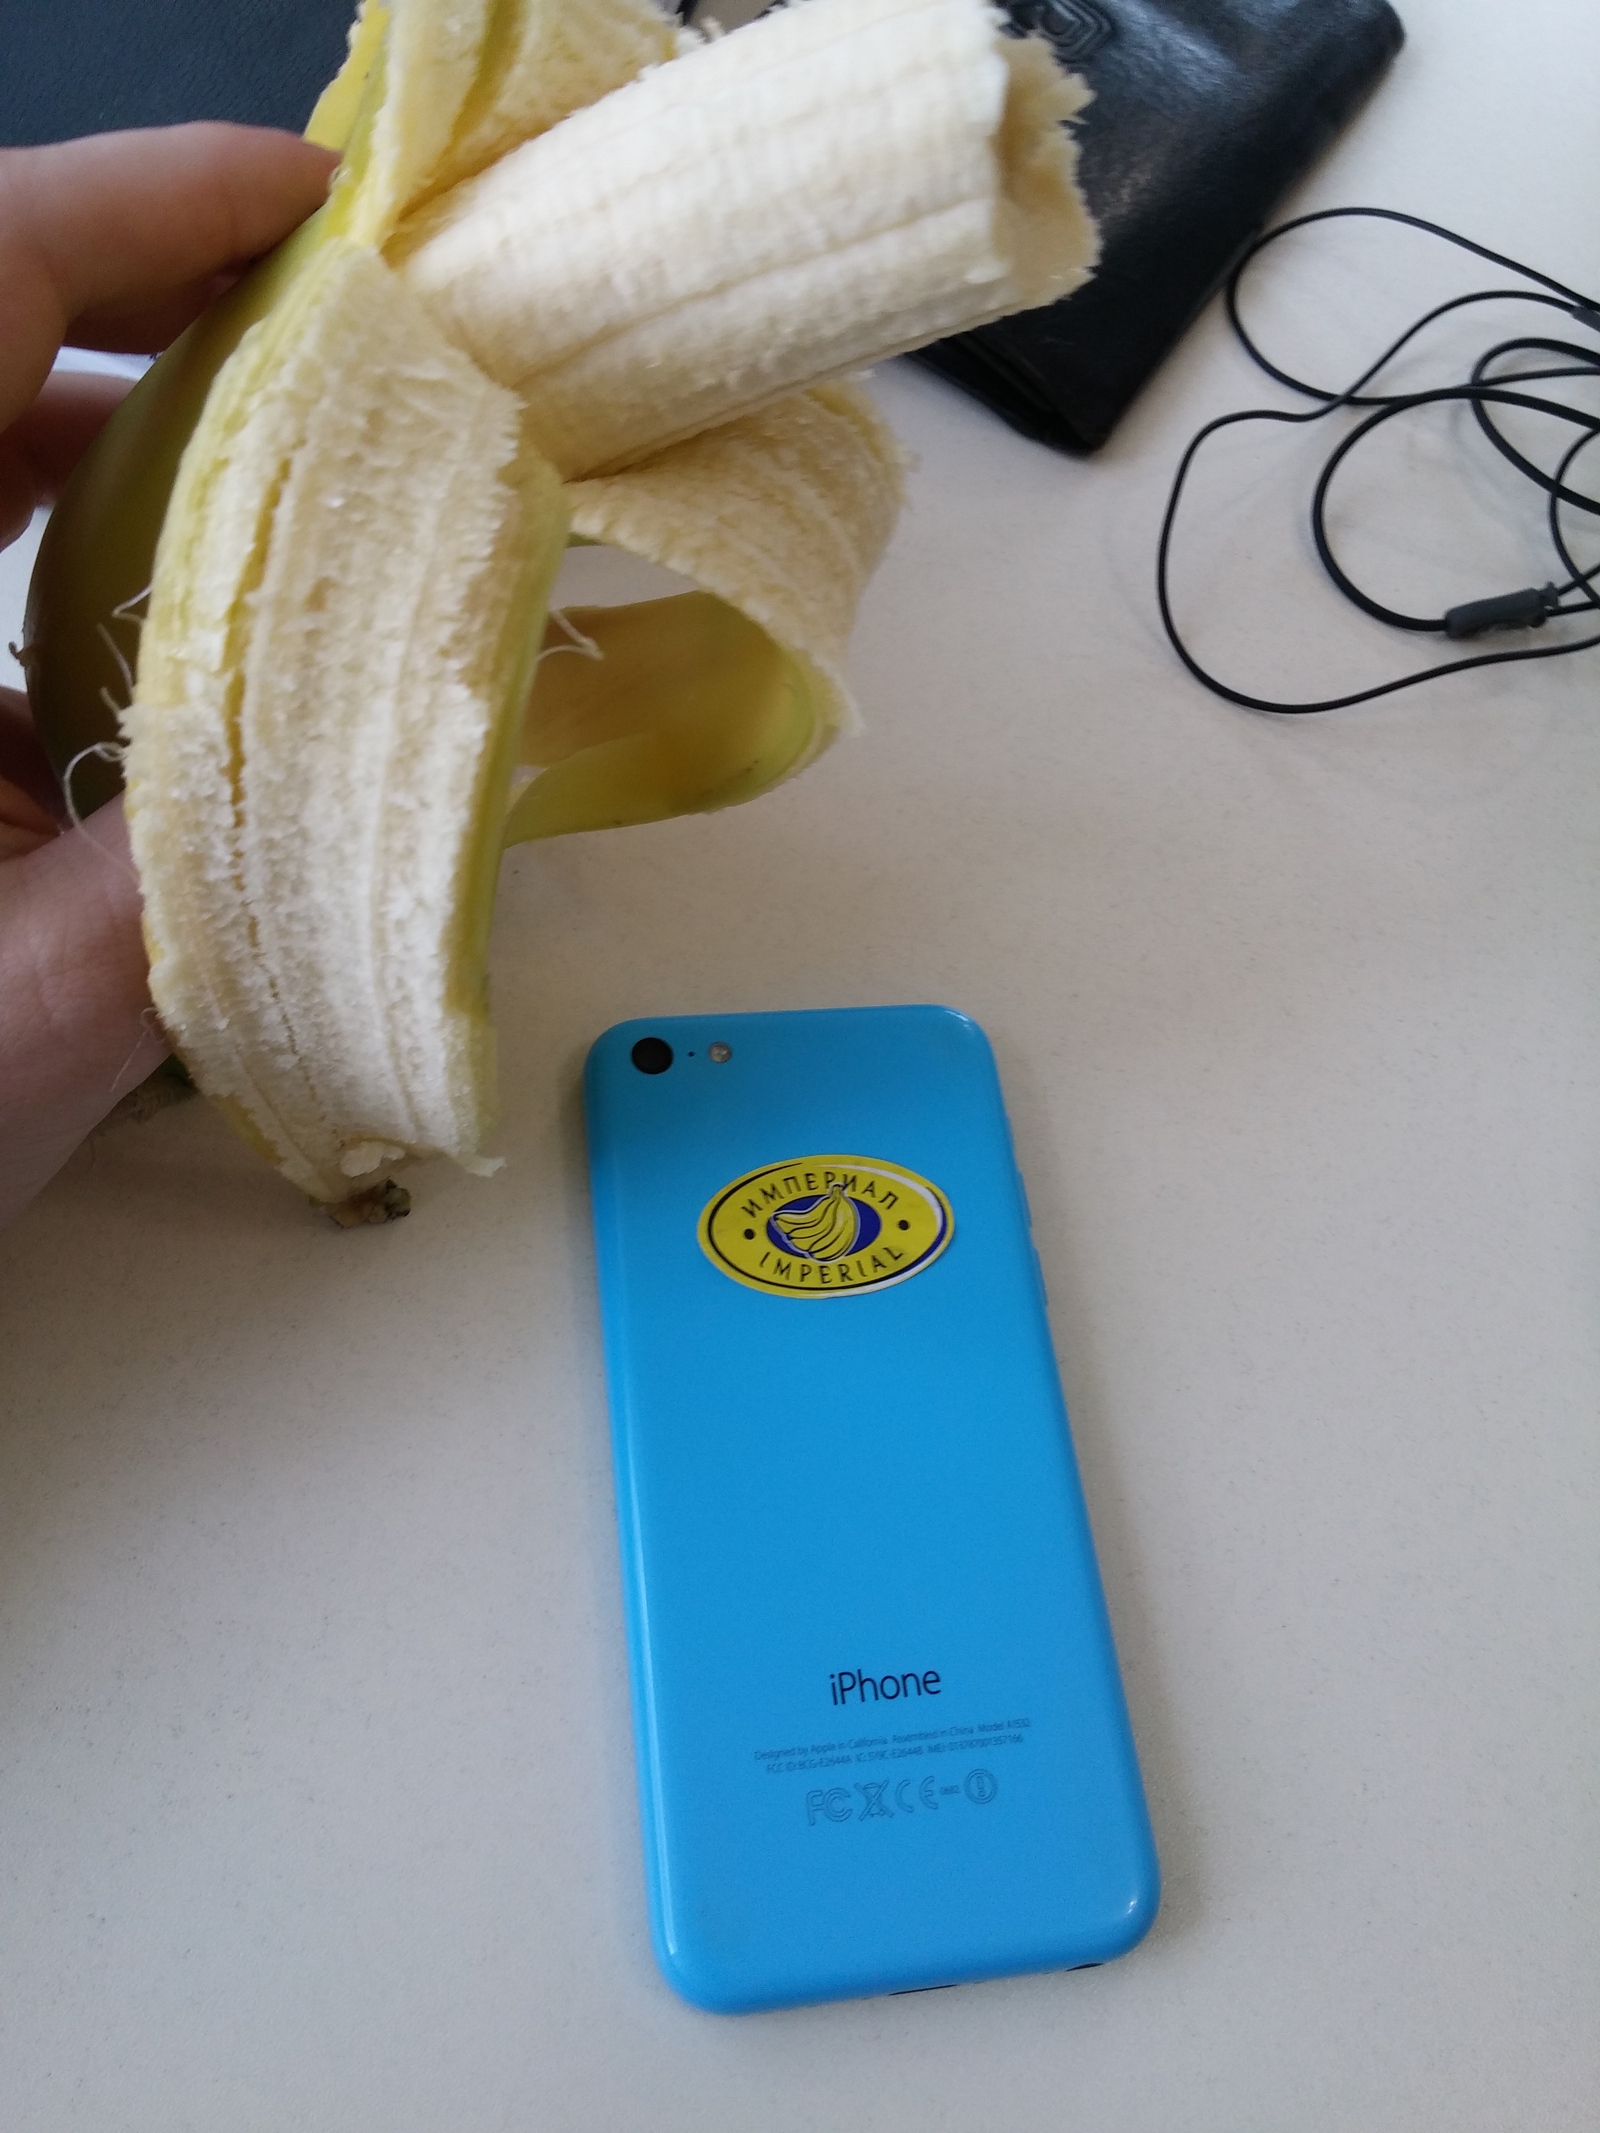 Bananaphone - Banana, iPhone 5C, iPhone, , My